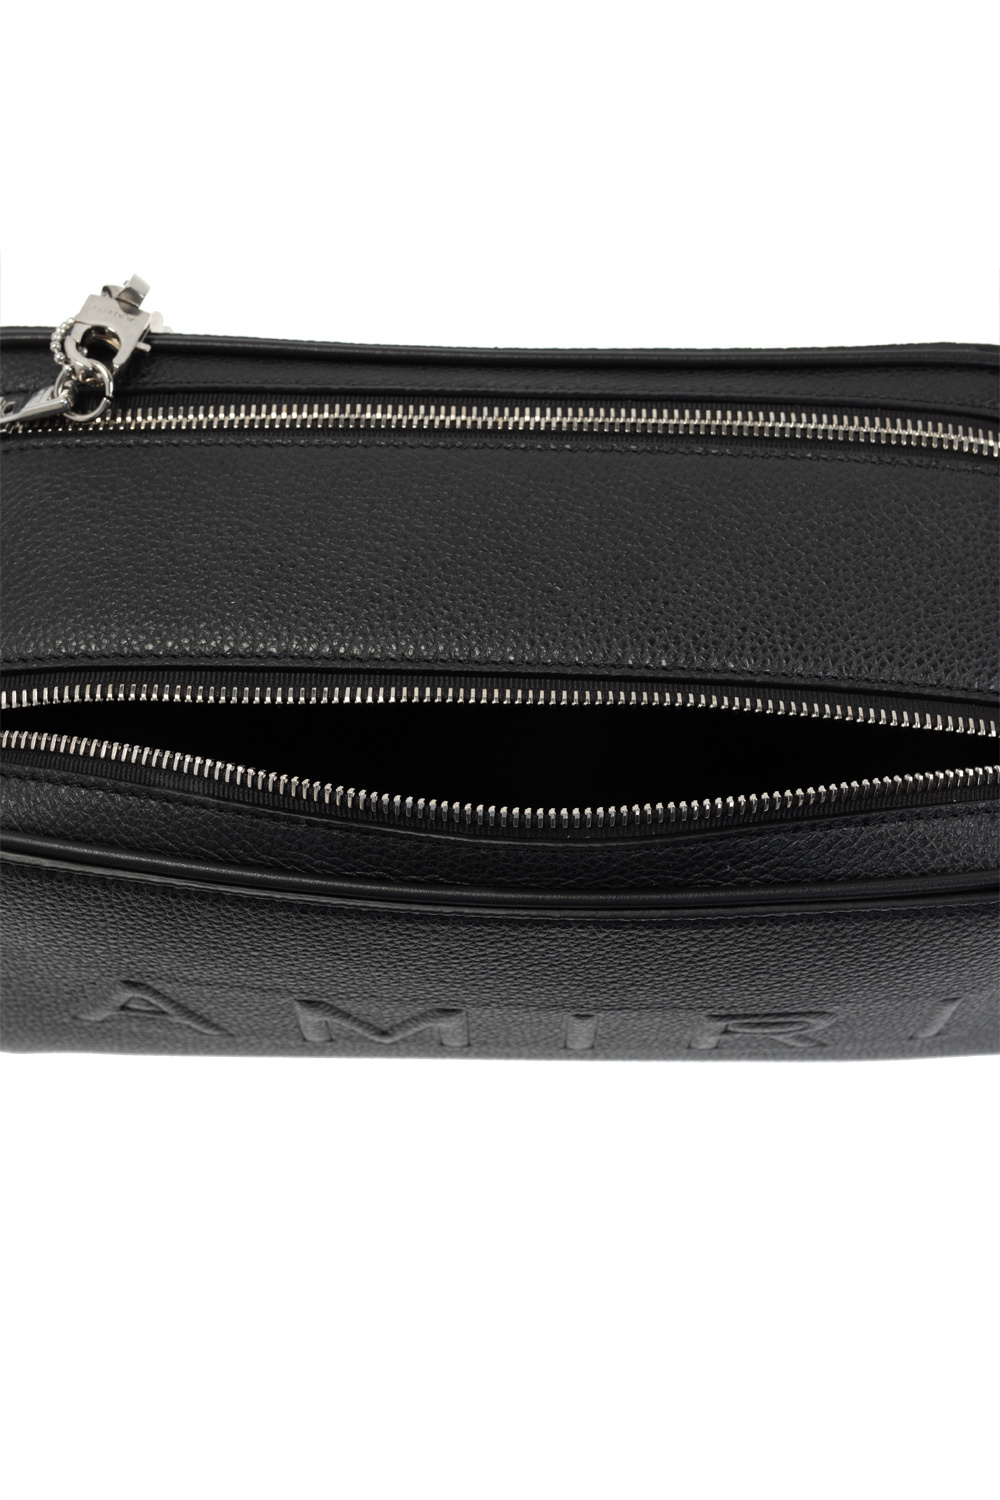 Amiri For Lakeland Leather Raven Leather Cross-Body Bag